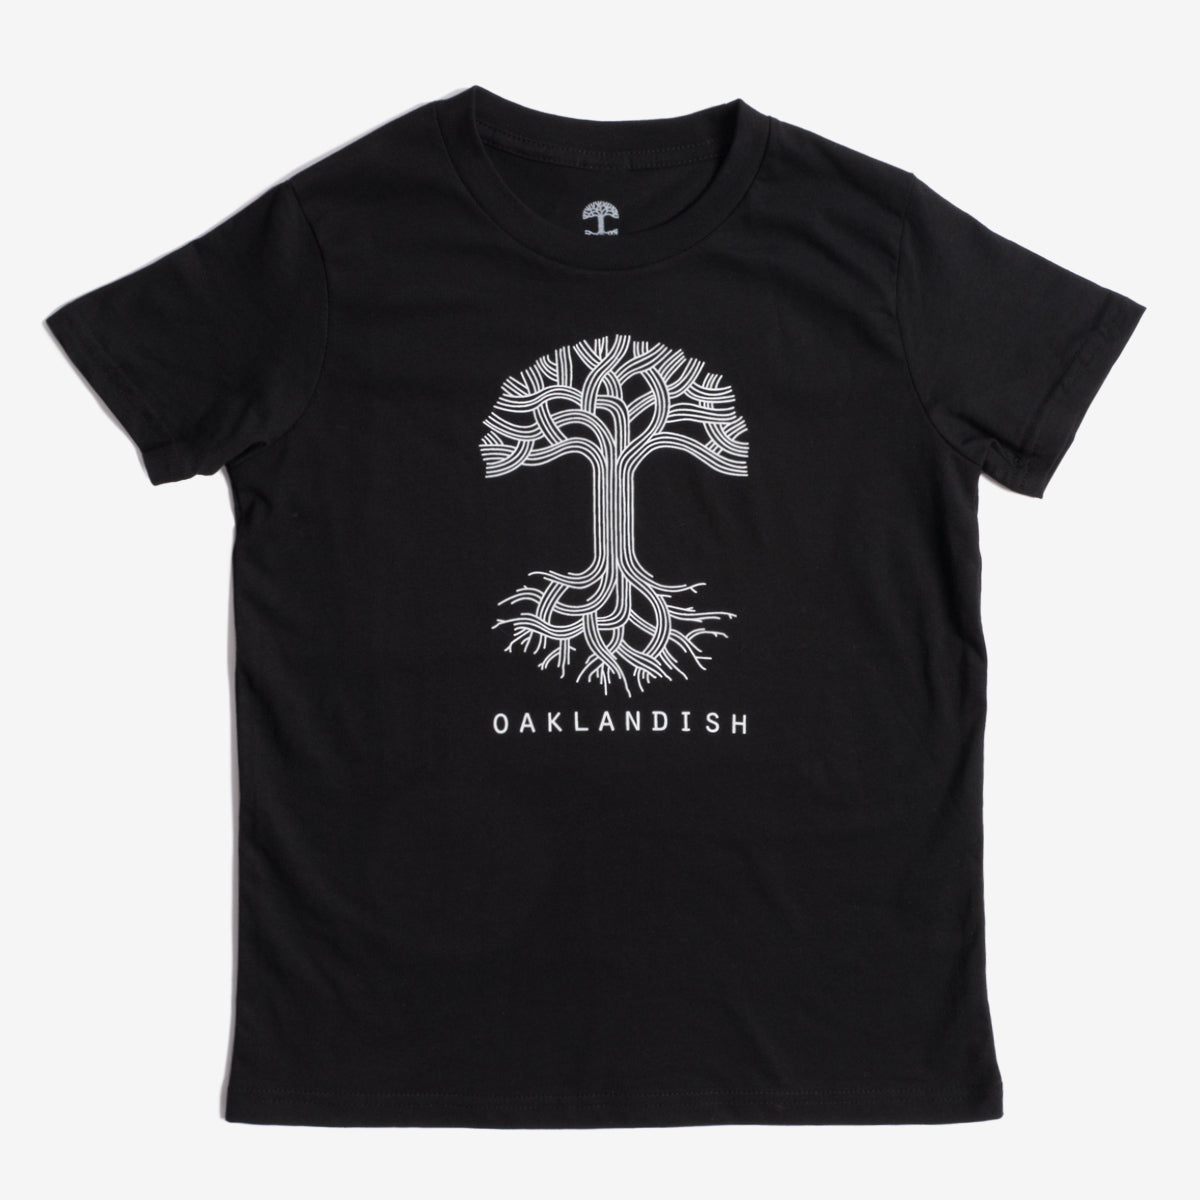 Youth T-Shirt - Oaklandish Classic Tree Logo, Black Cotton